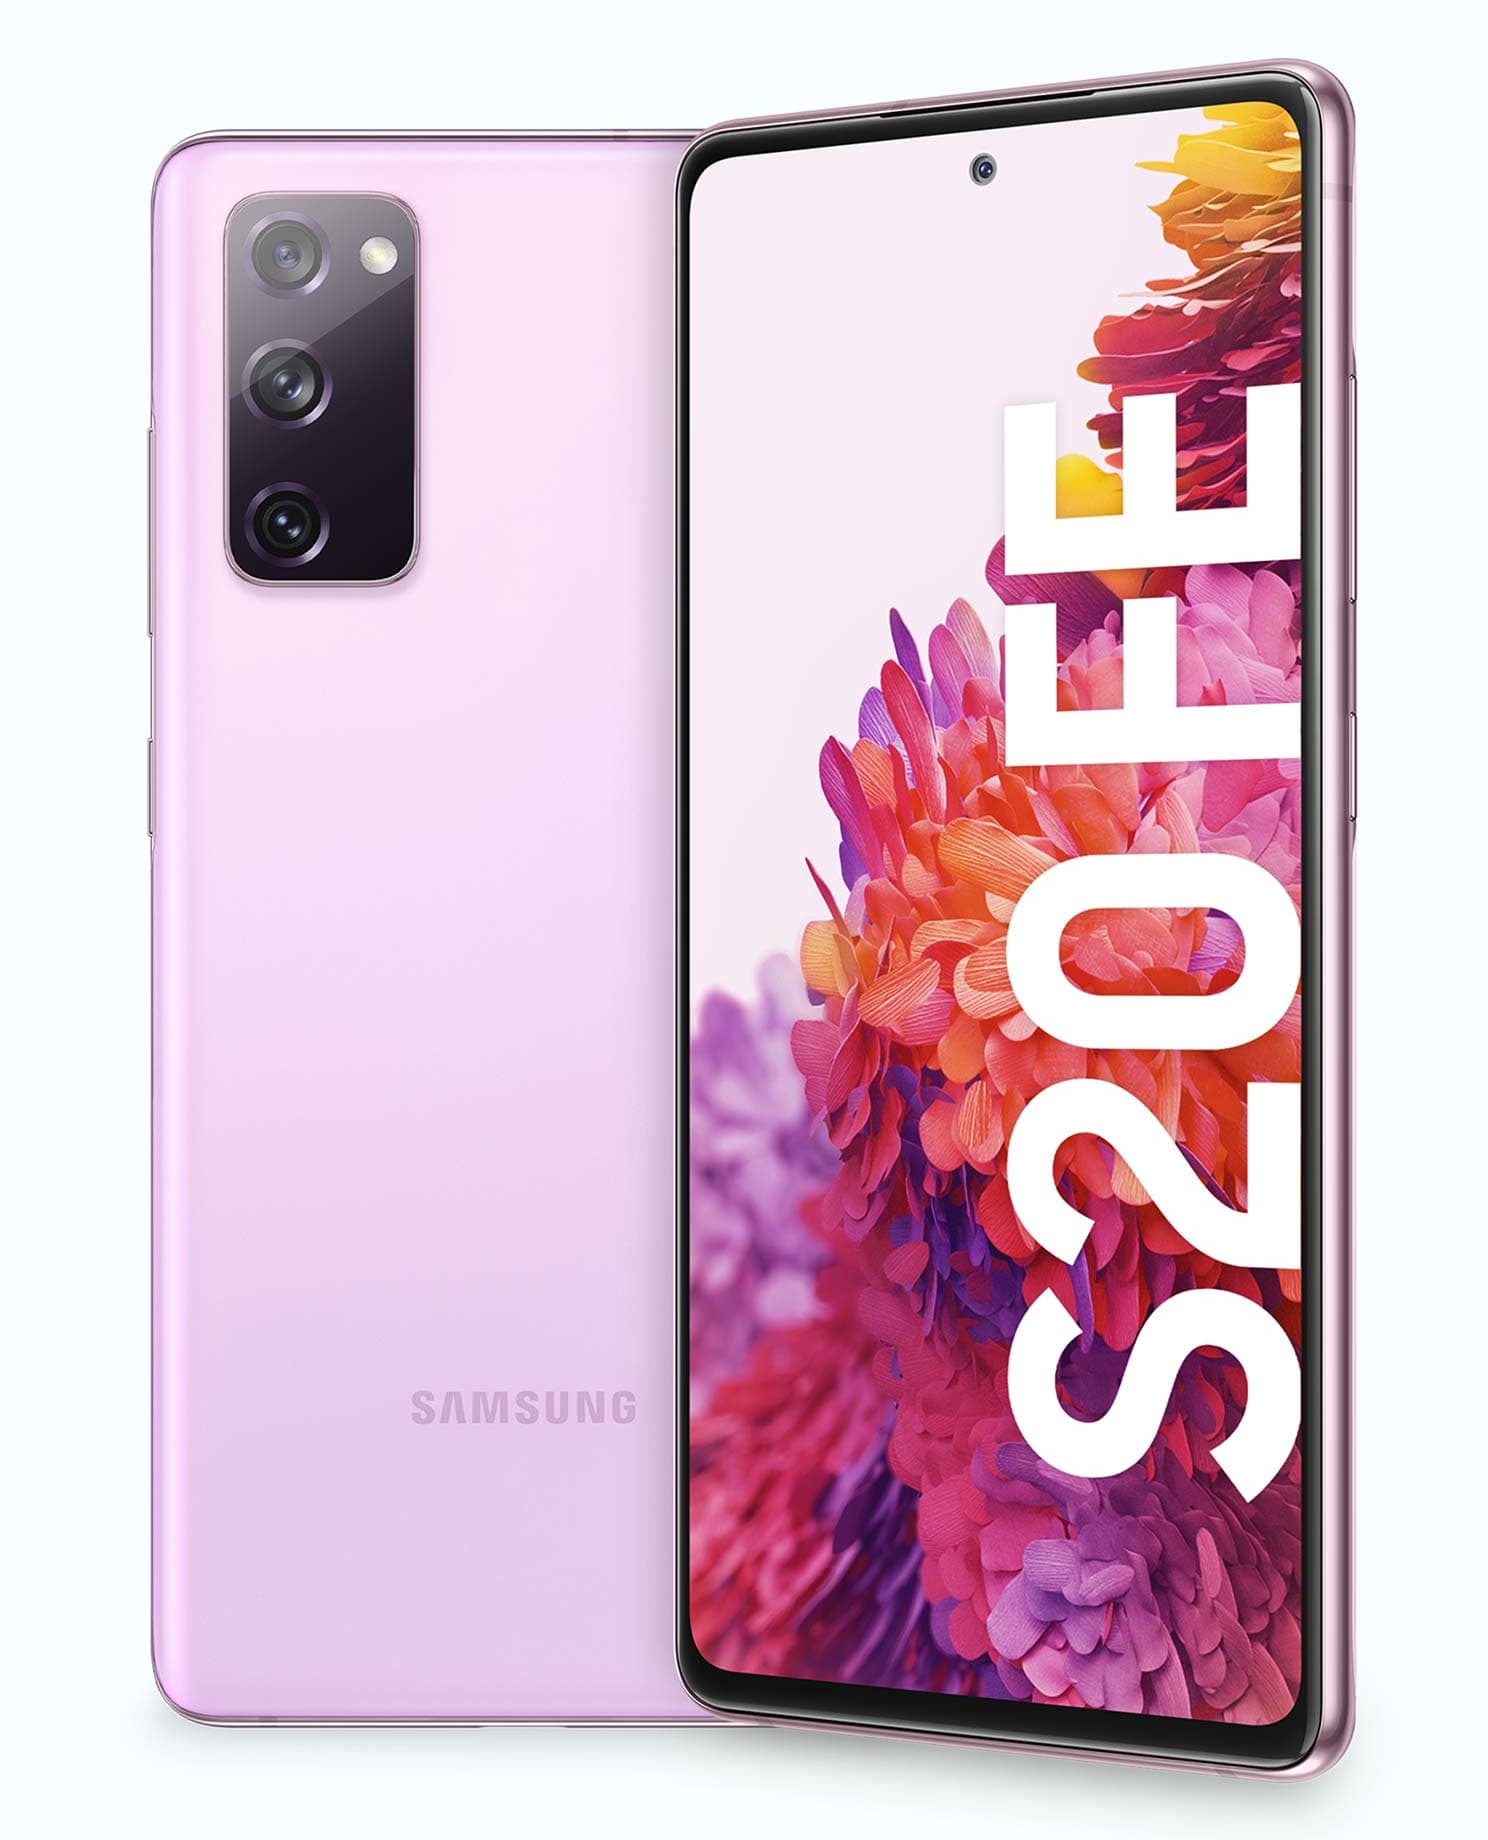 Samsung Galaxy S20 - Smartphone - 32 MP 128 GB - Grün, Rot, Violett